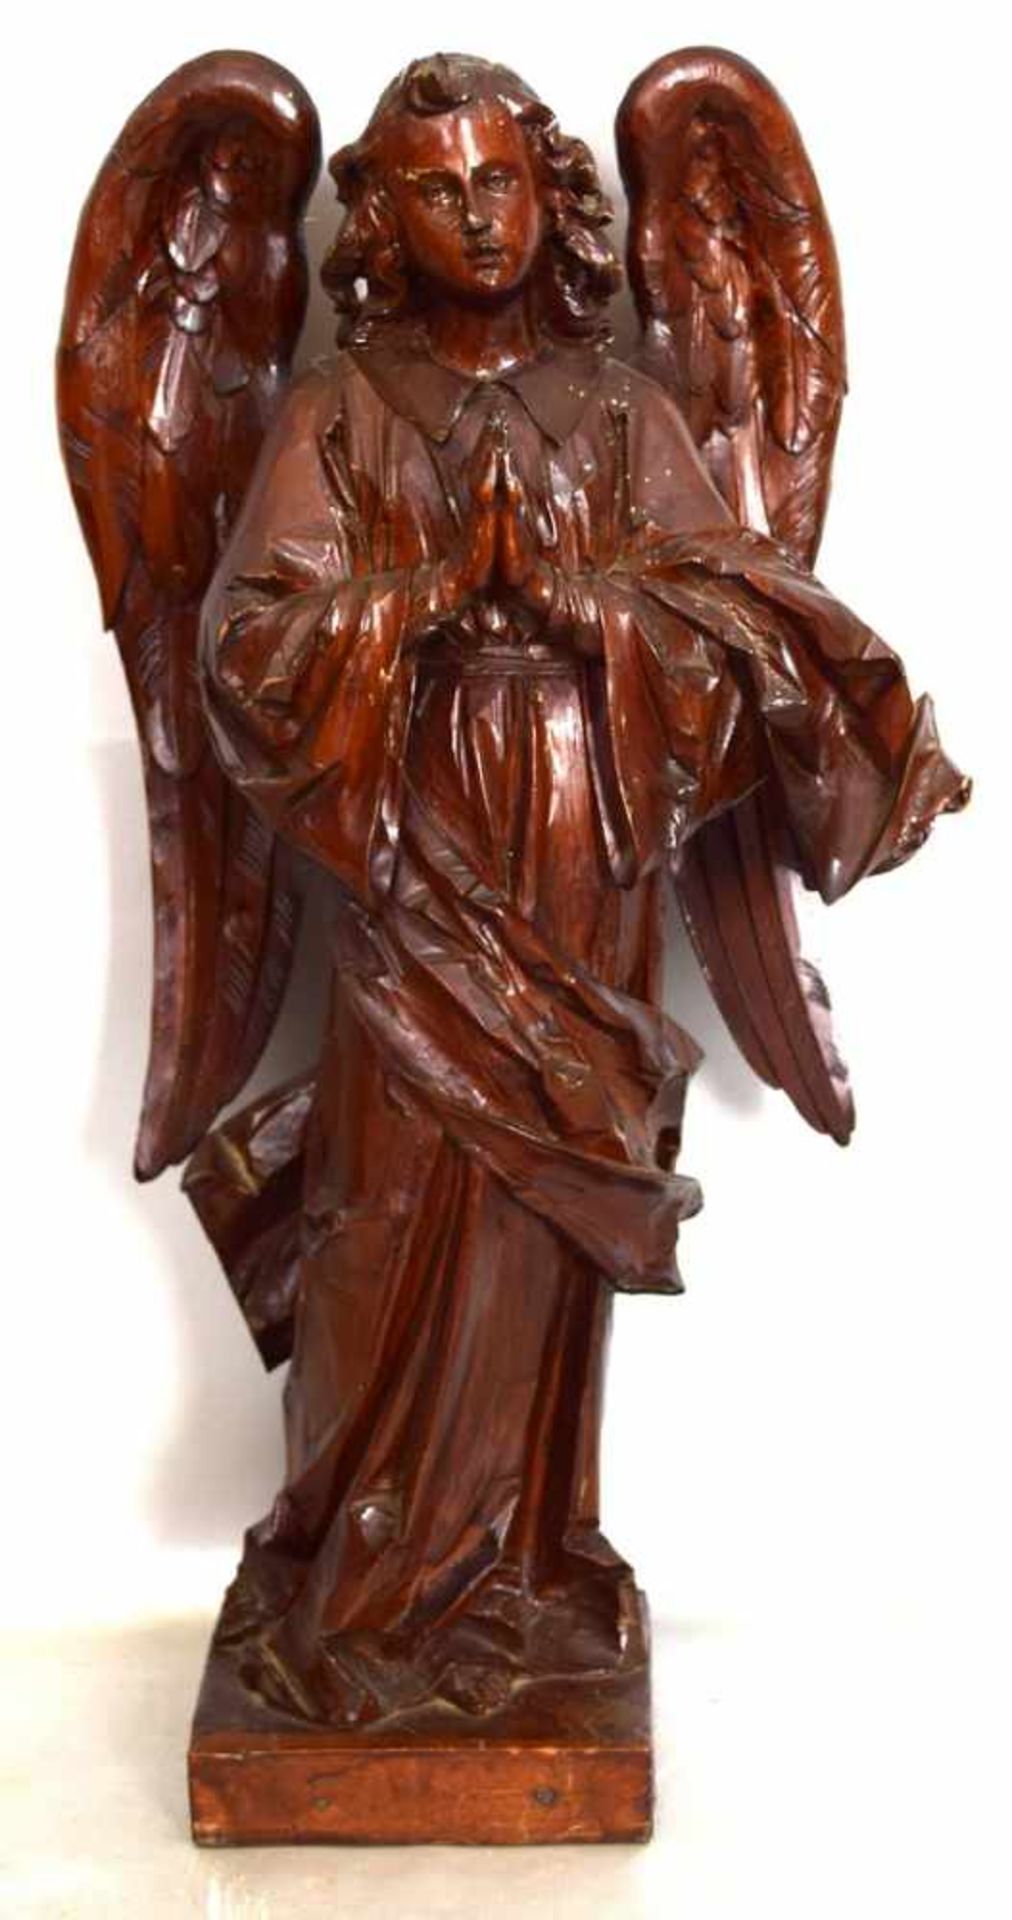 Betender EngelHartholz, geschnitzt, auf rechteckigem Sockel stehend, H 42 cm, 19./20. Jh.